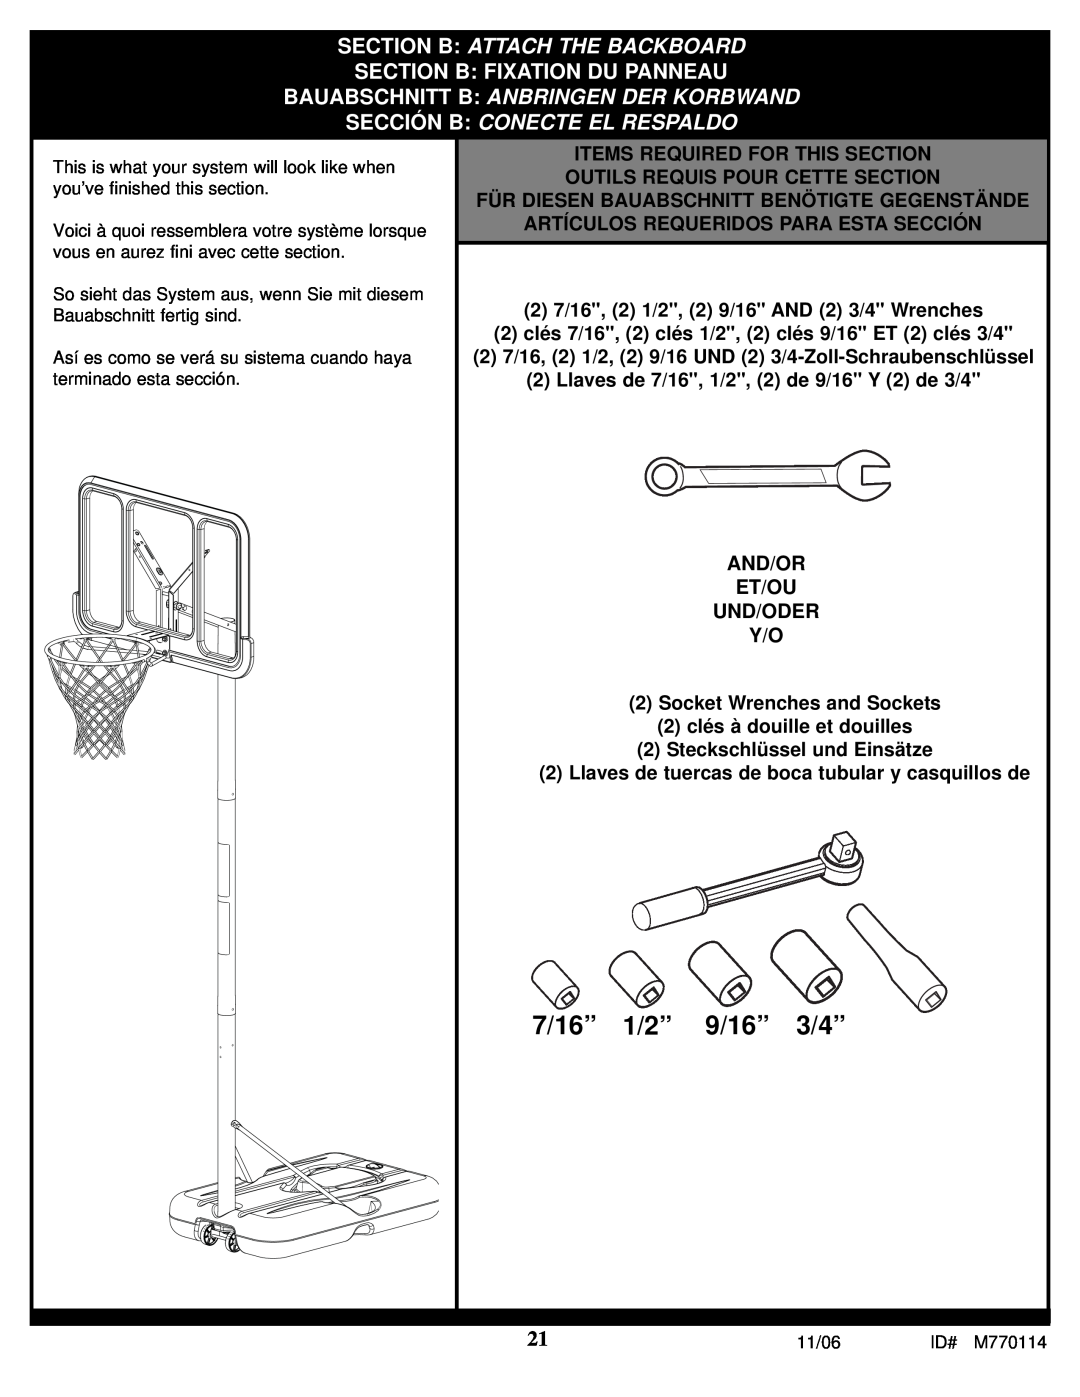 Huffy WM2688H manual 7/16” 1/2” 9/16” 3/4”, Section B Attach The Backboard, Section B Fixation Du Panneau 